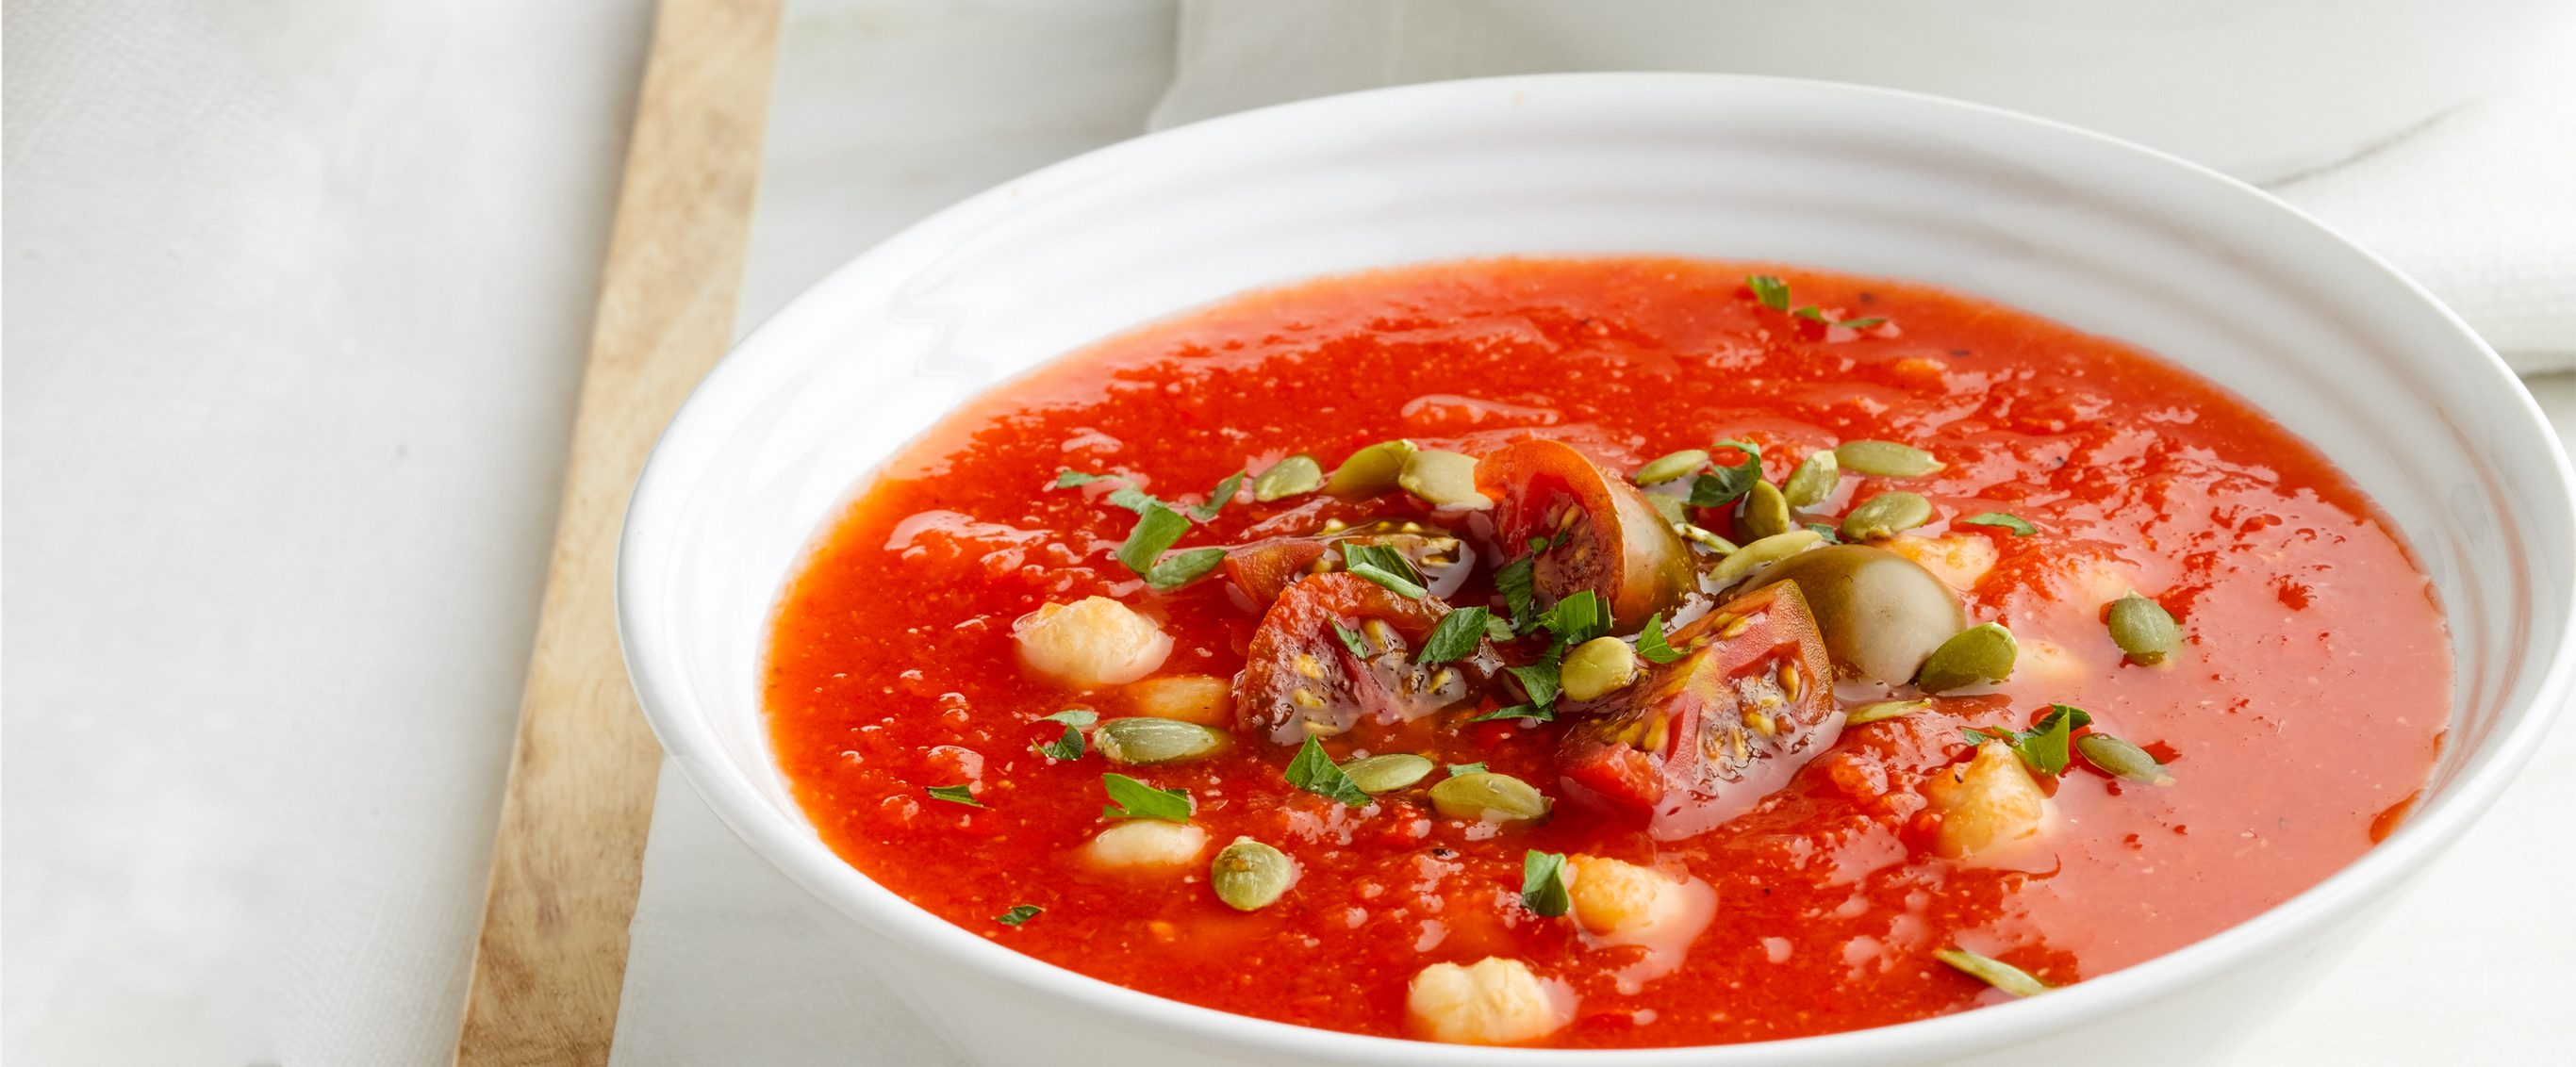 Vegan Tomato Soup with Chickpeas